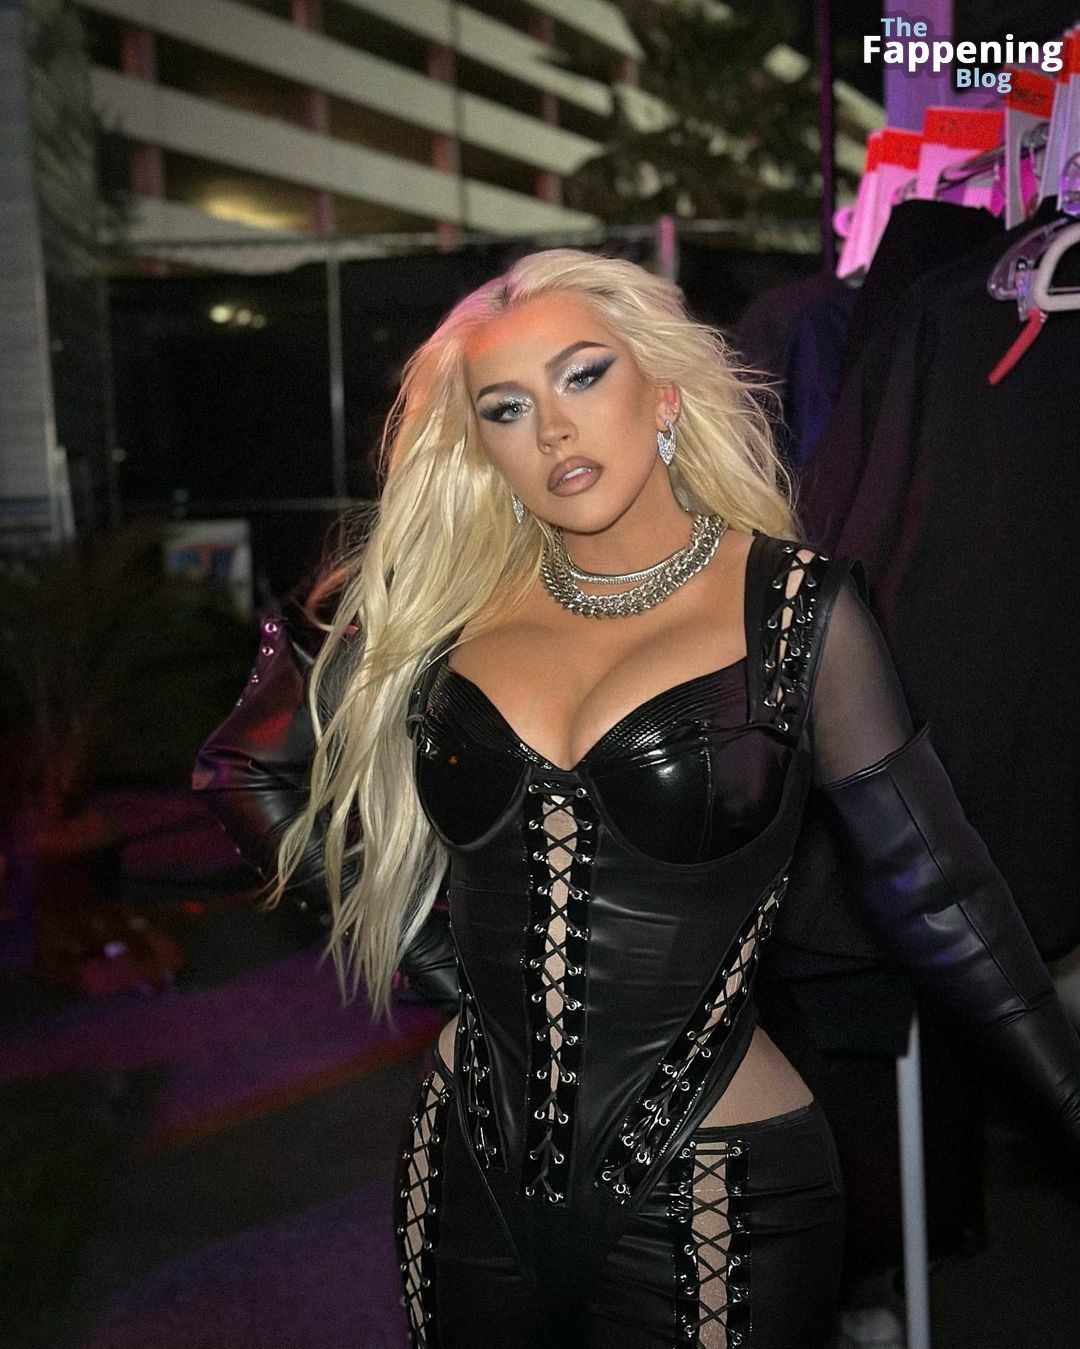 Christina Aguilera Rocks Her Black Leather Outfit 10 Photos.jpg